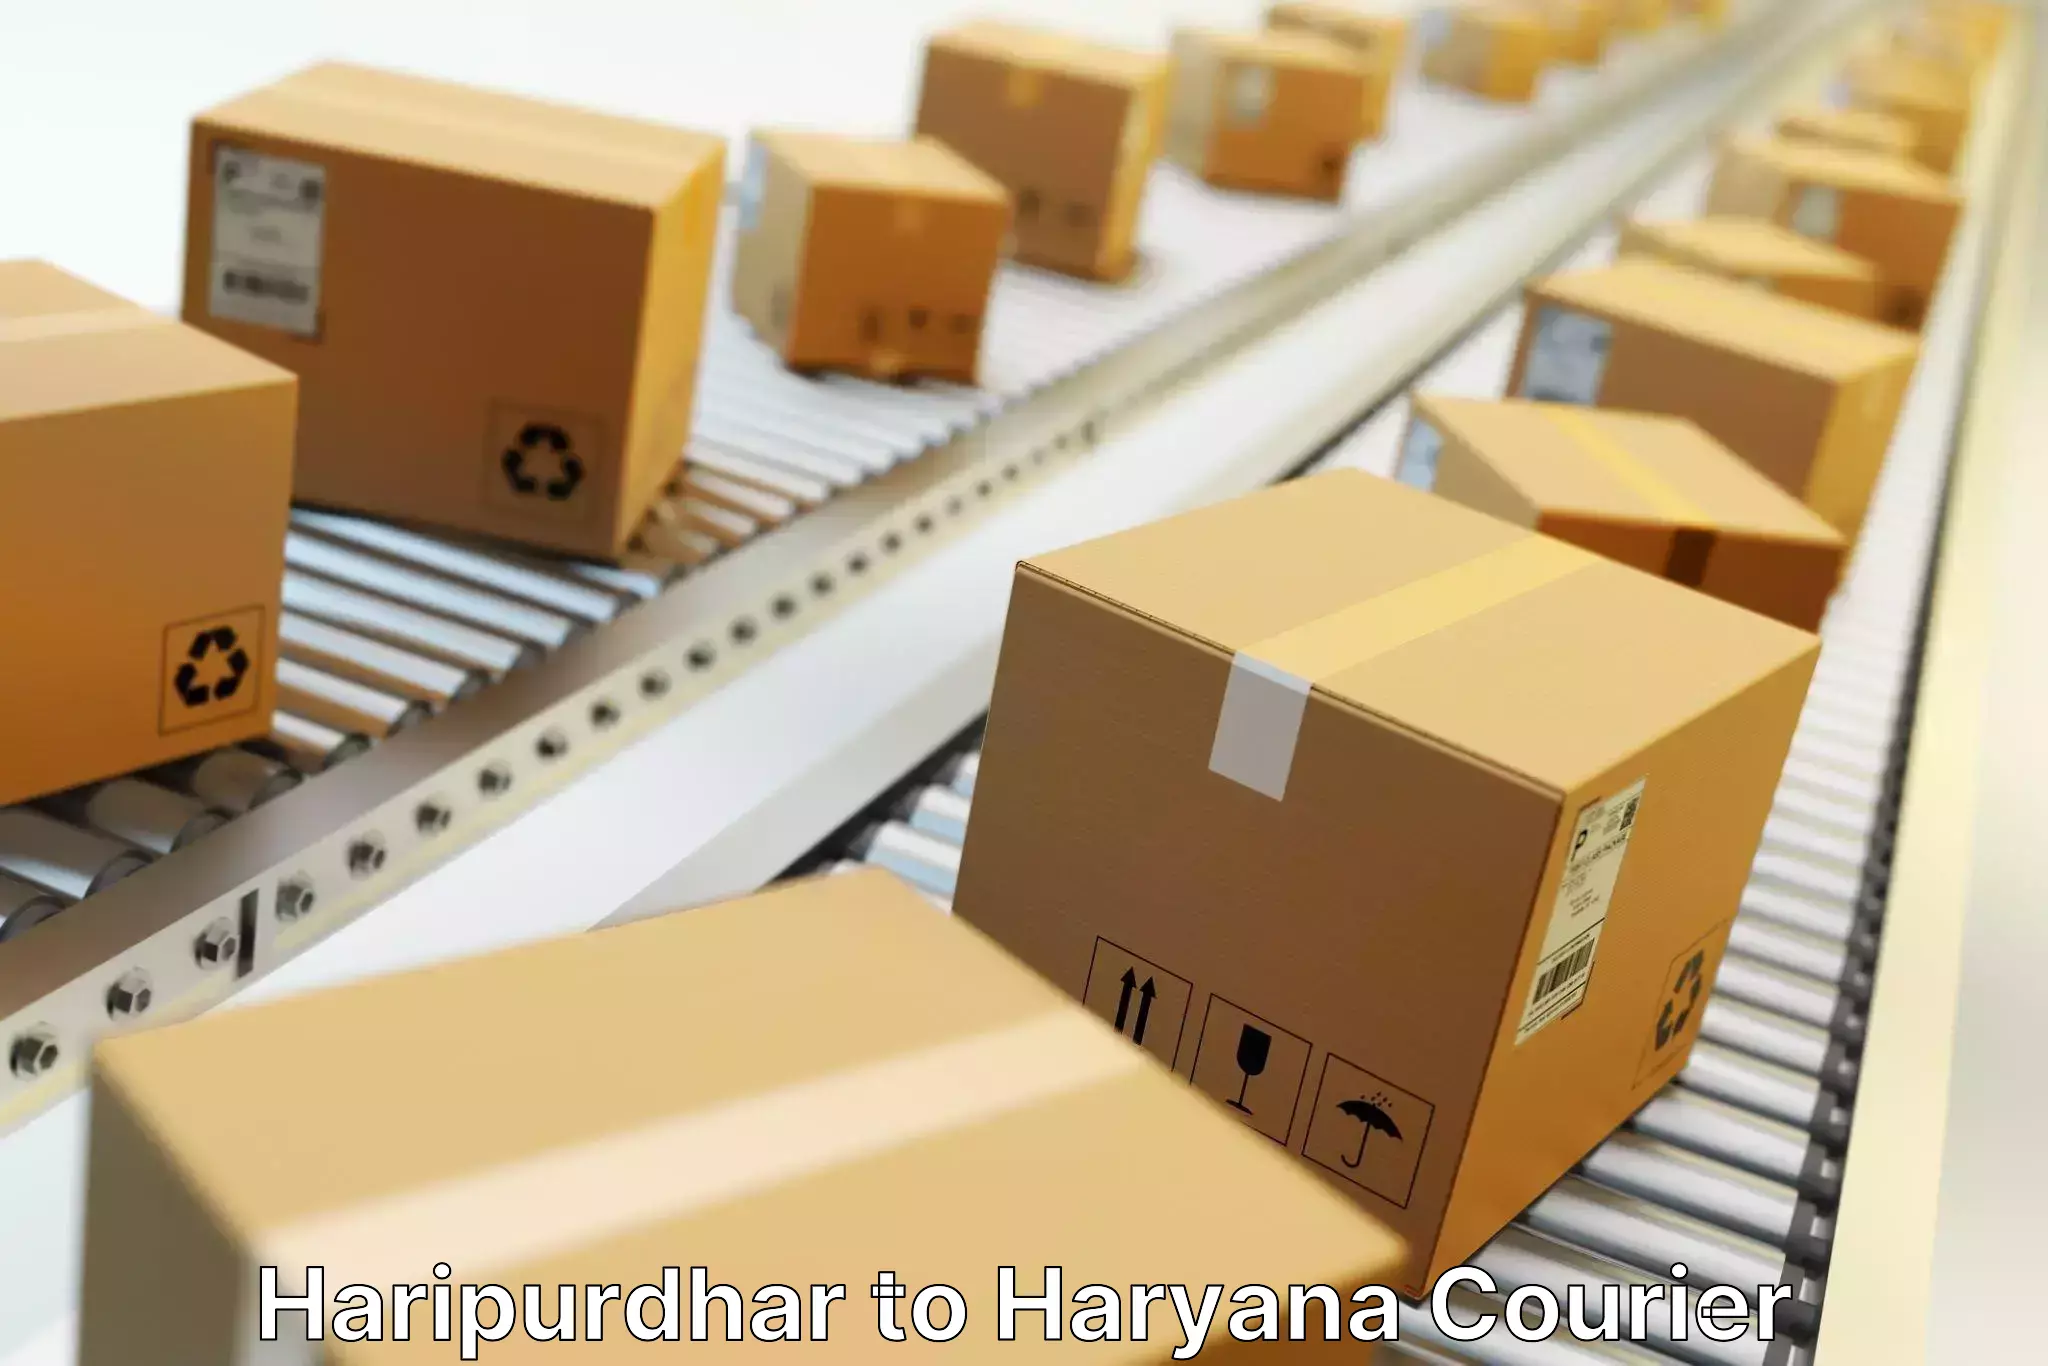 Shipping and handling Haripurdhar to Faridabad